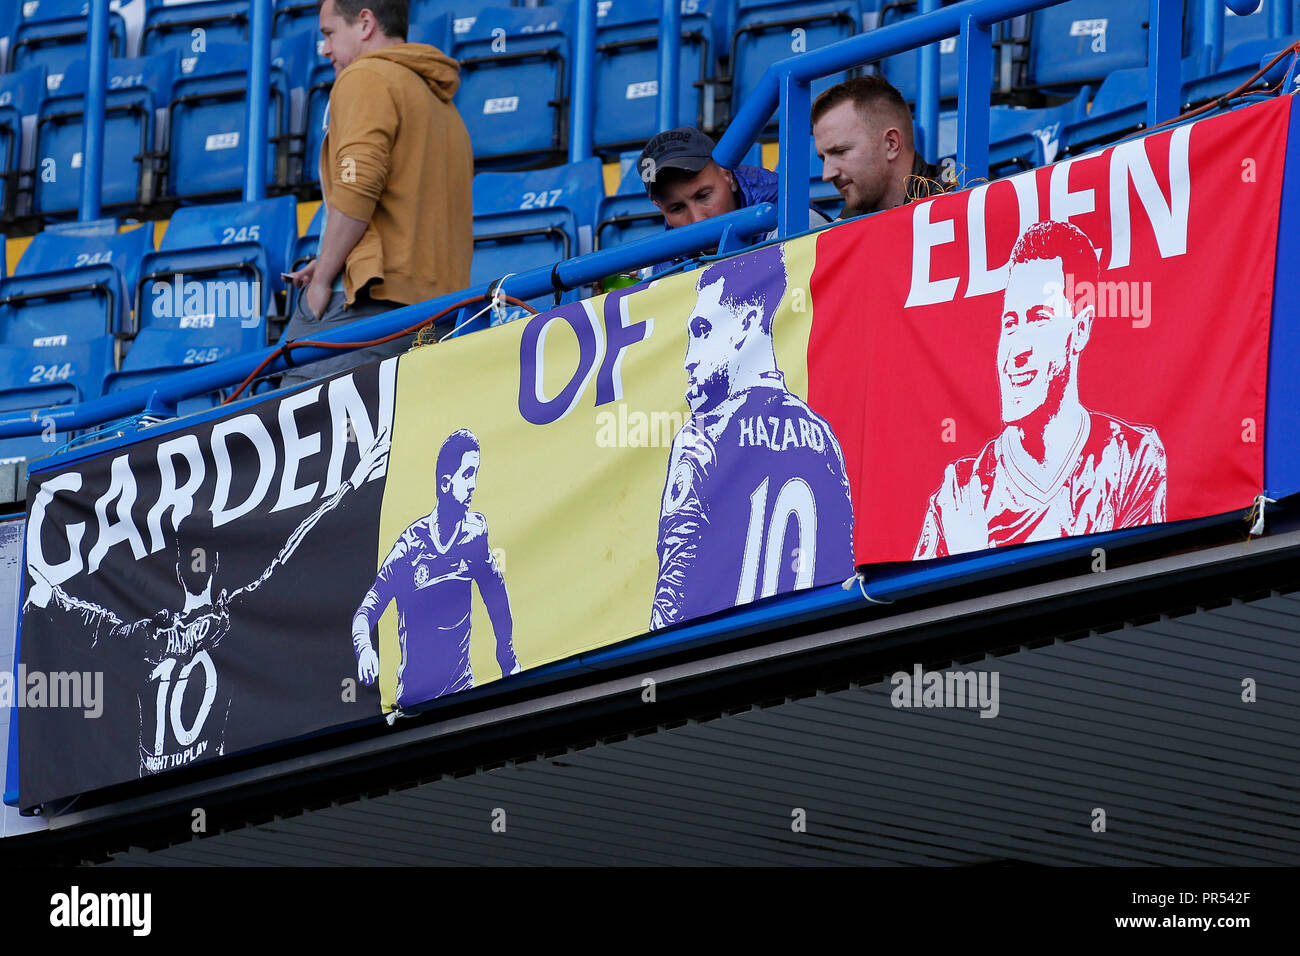 A Banner Depicting This As The Garden Of Eden Hazard Of Chelsea